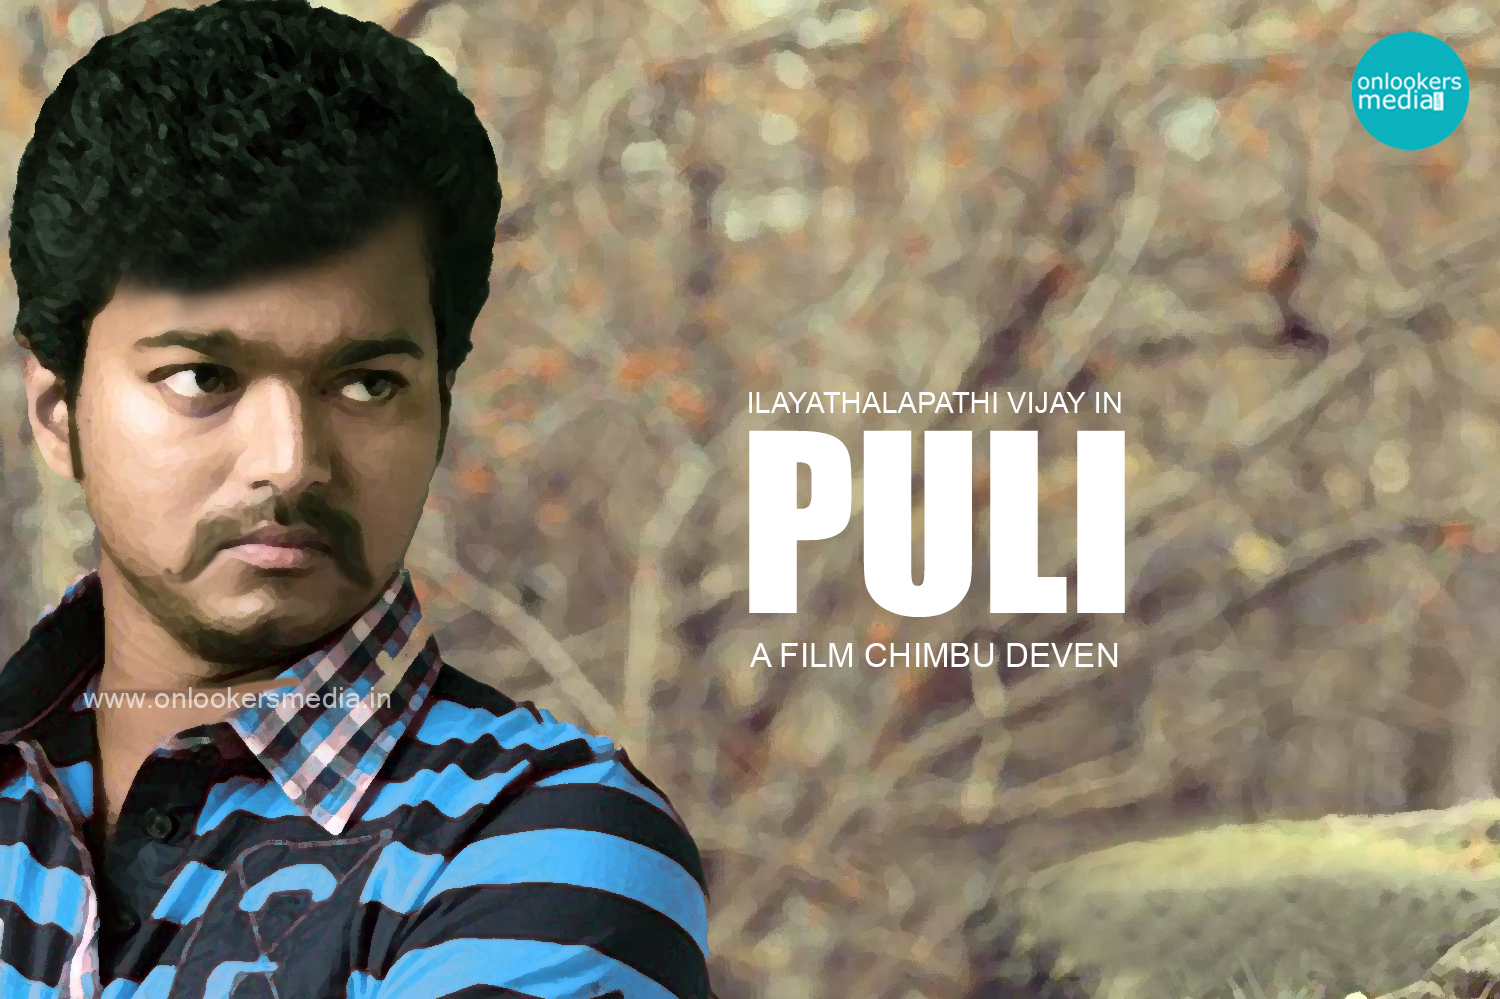 Vijay in Puli-Movie Stills-images-posters-video-mp-song-Onlookers Media